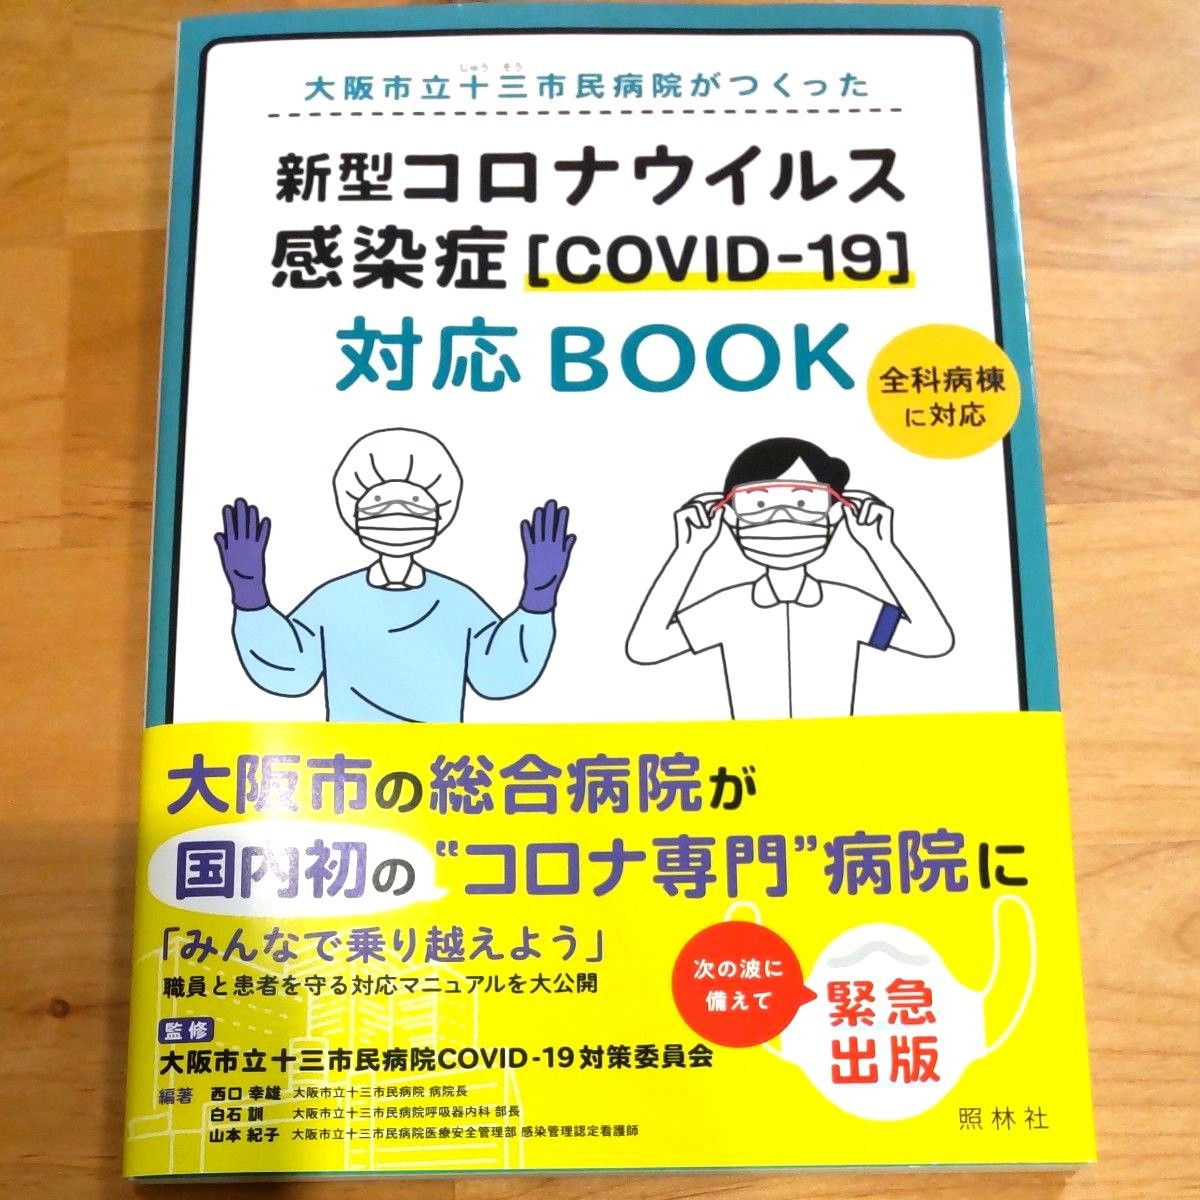 新型コロナウイルス感染症【COVID-19】対応BOOK  大阪市立十三市民病院COVID-19対策委員会監修